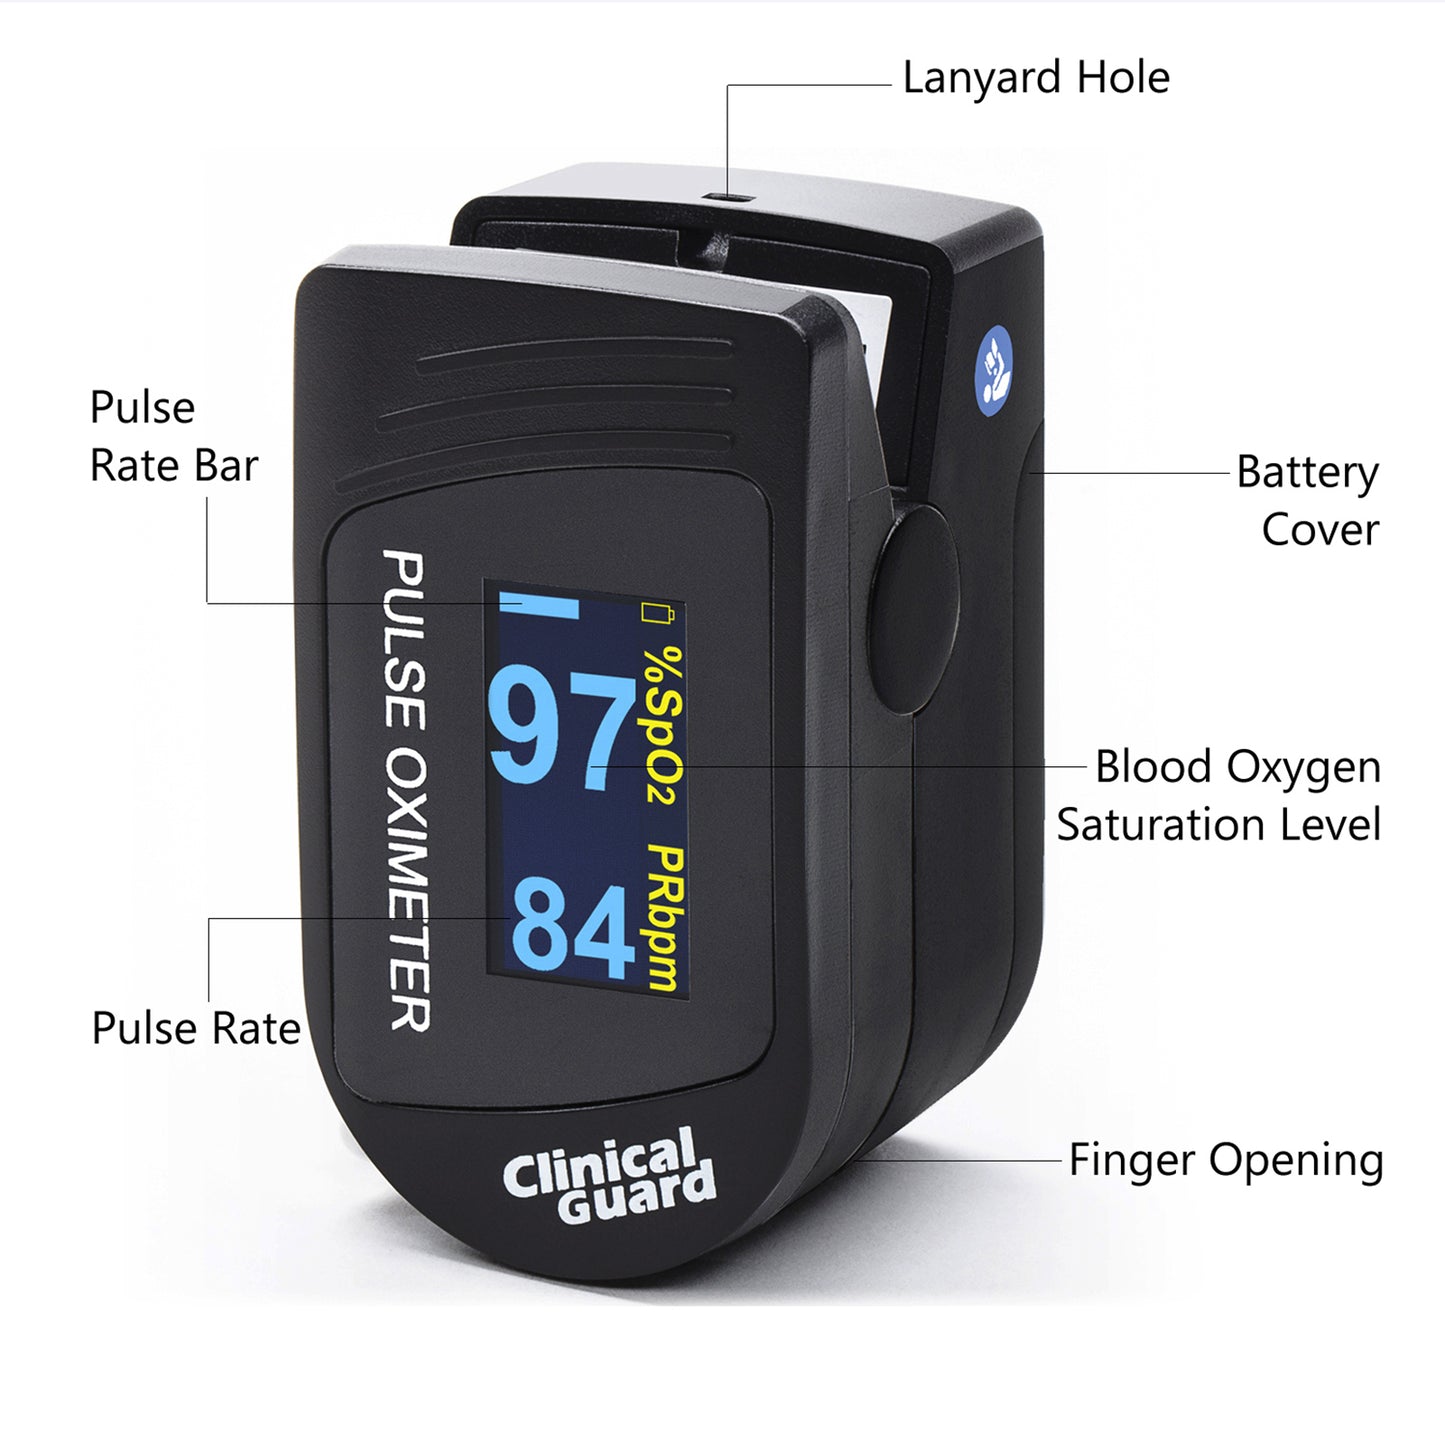 Finger Pulse Oximeter Clinical Guard 500S Image 7 - Diagraph